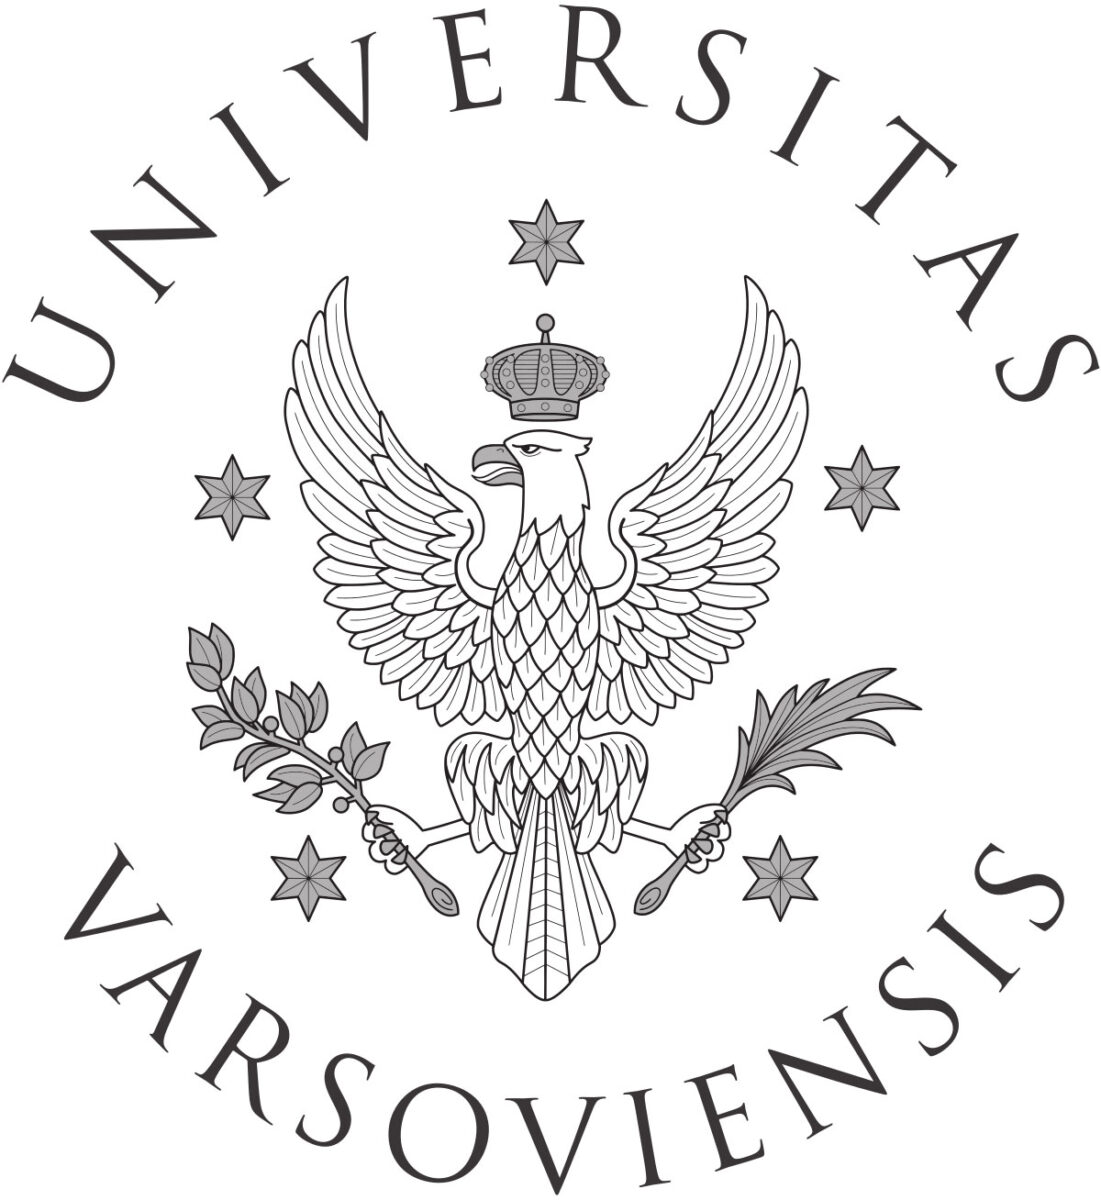 The University of Warsaw logo.